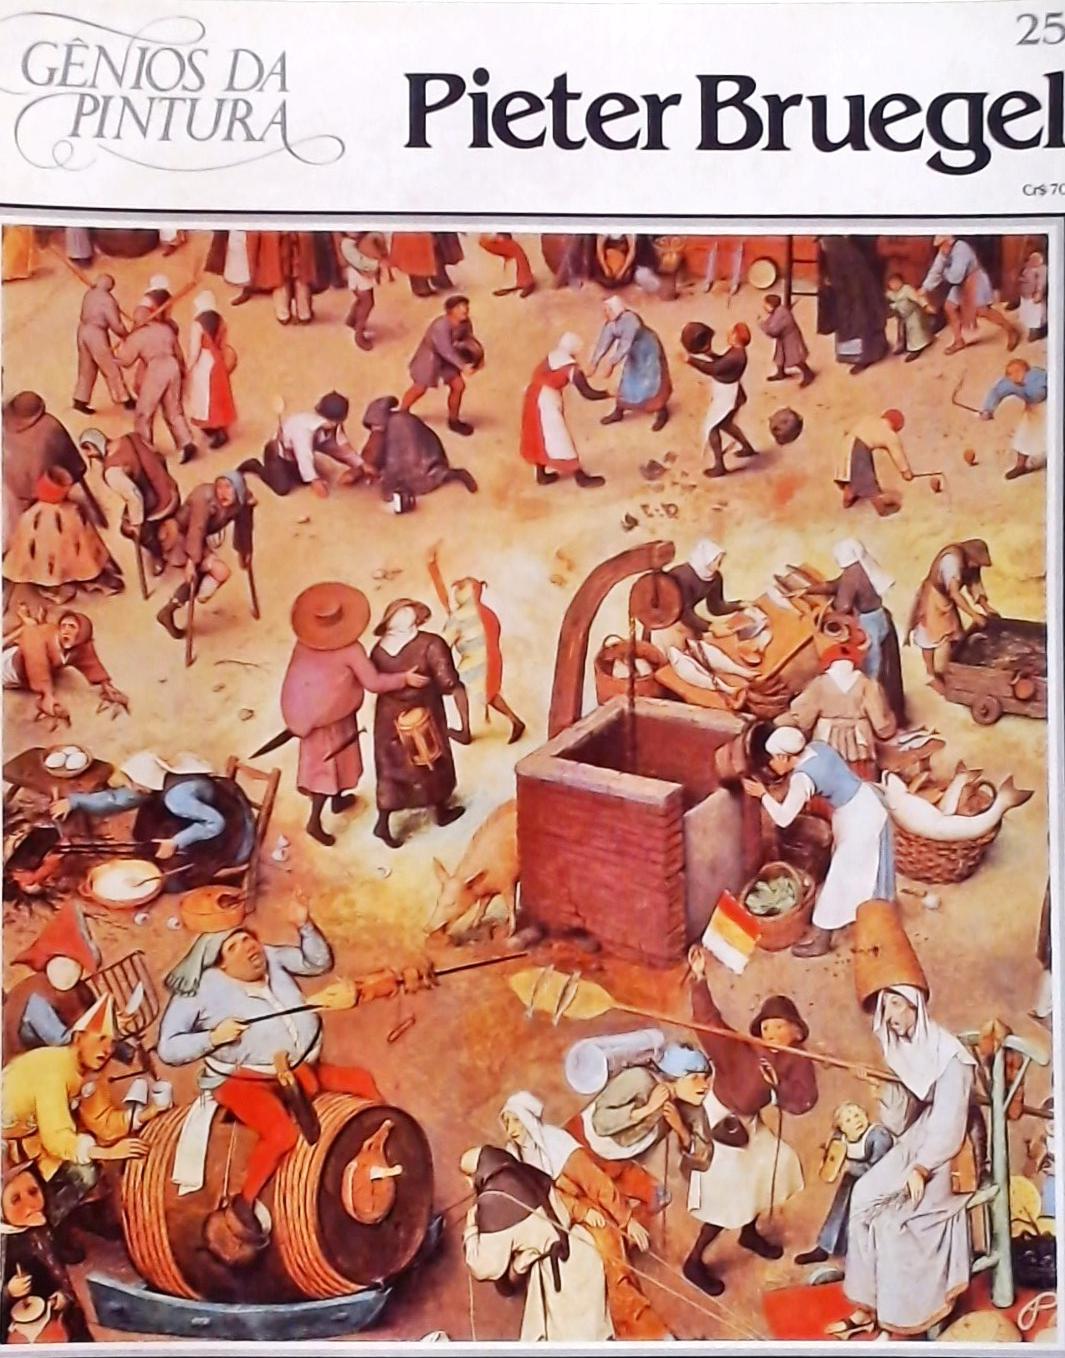 Gênios da Pintura - Pieter Bruegel